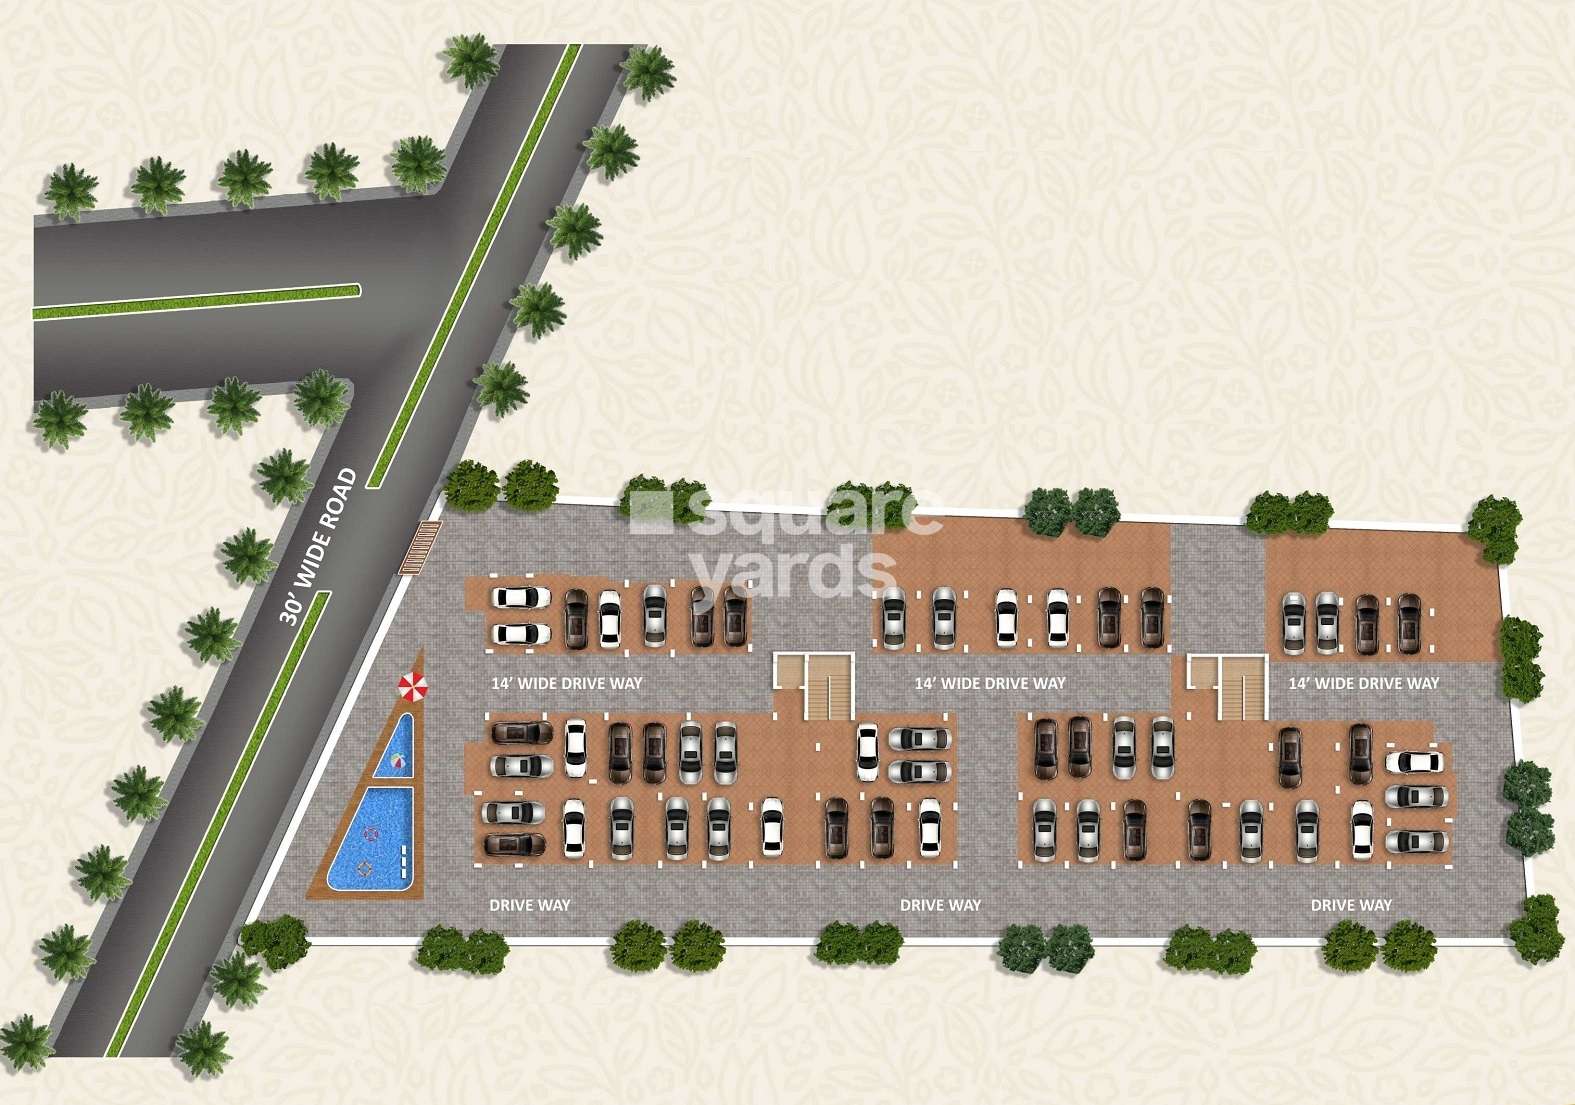 cbr aavani project master plan image1 5468